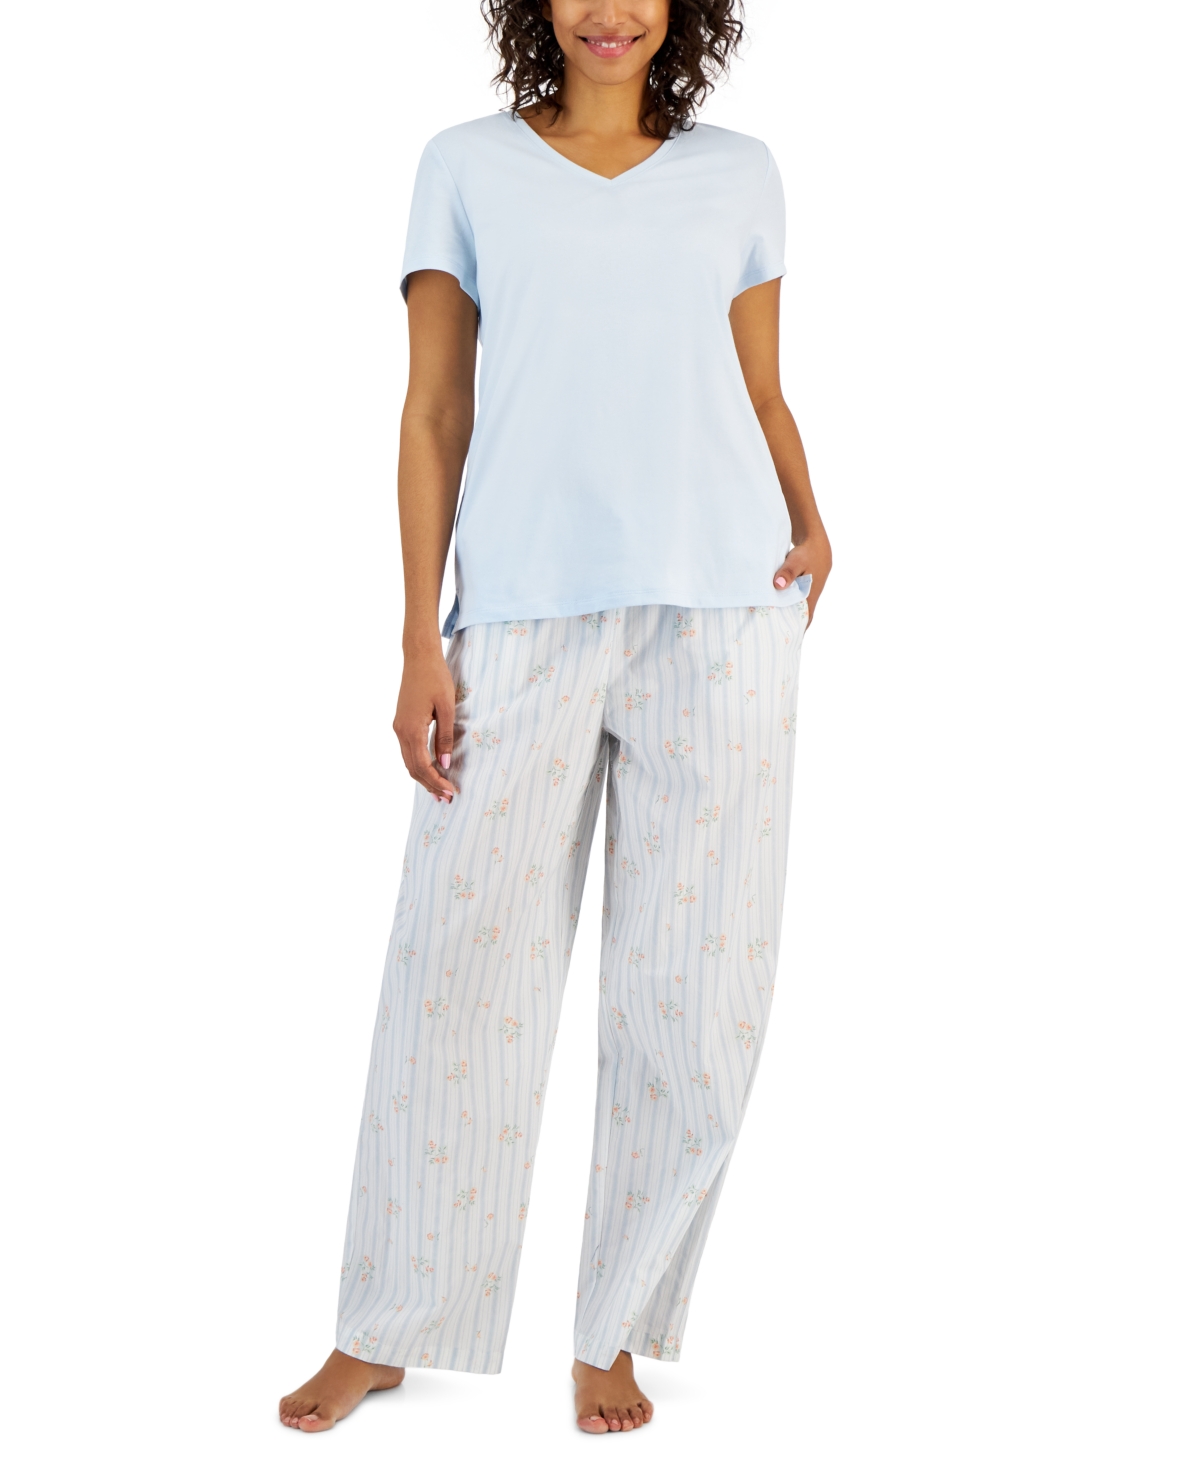 Charter Club Women's Cotton Plaid White / Multi Capri Pajama Pants